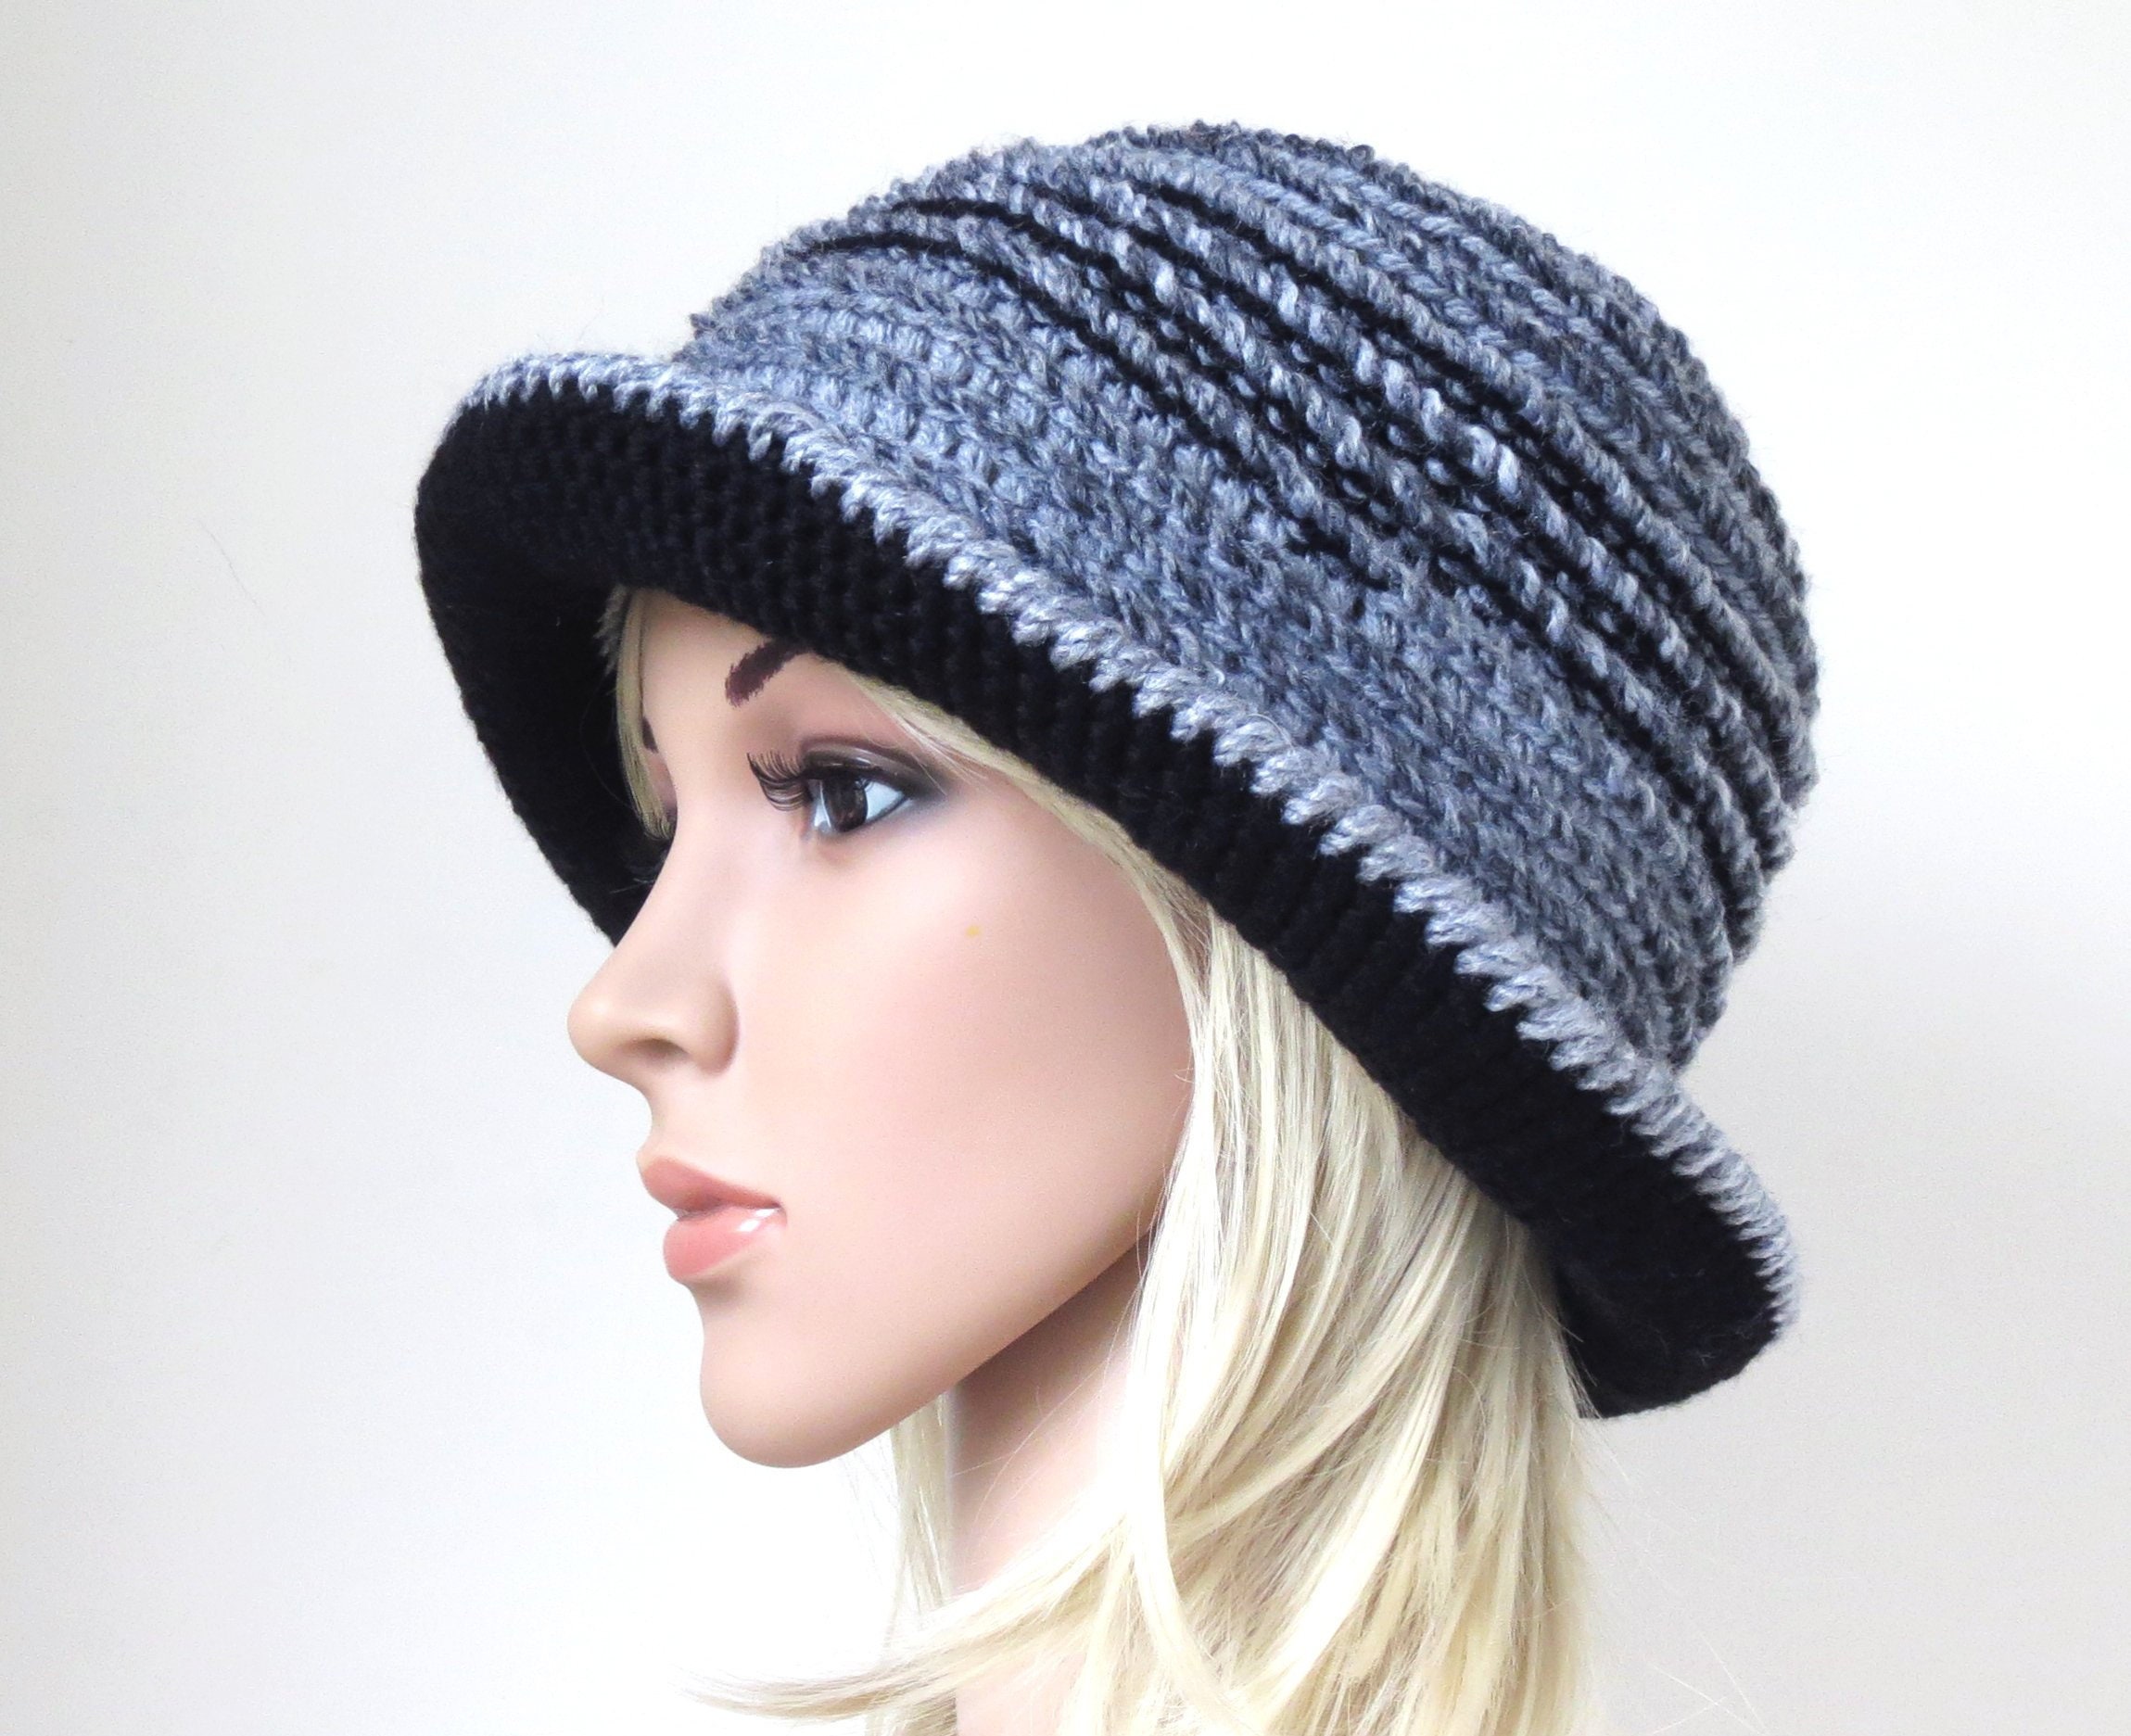 Soft Wool Brim Hat in Black and Gray Unique Crochet Boho | Etsy